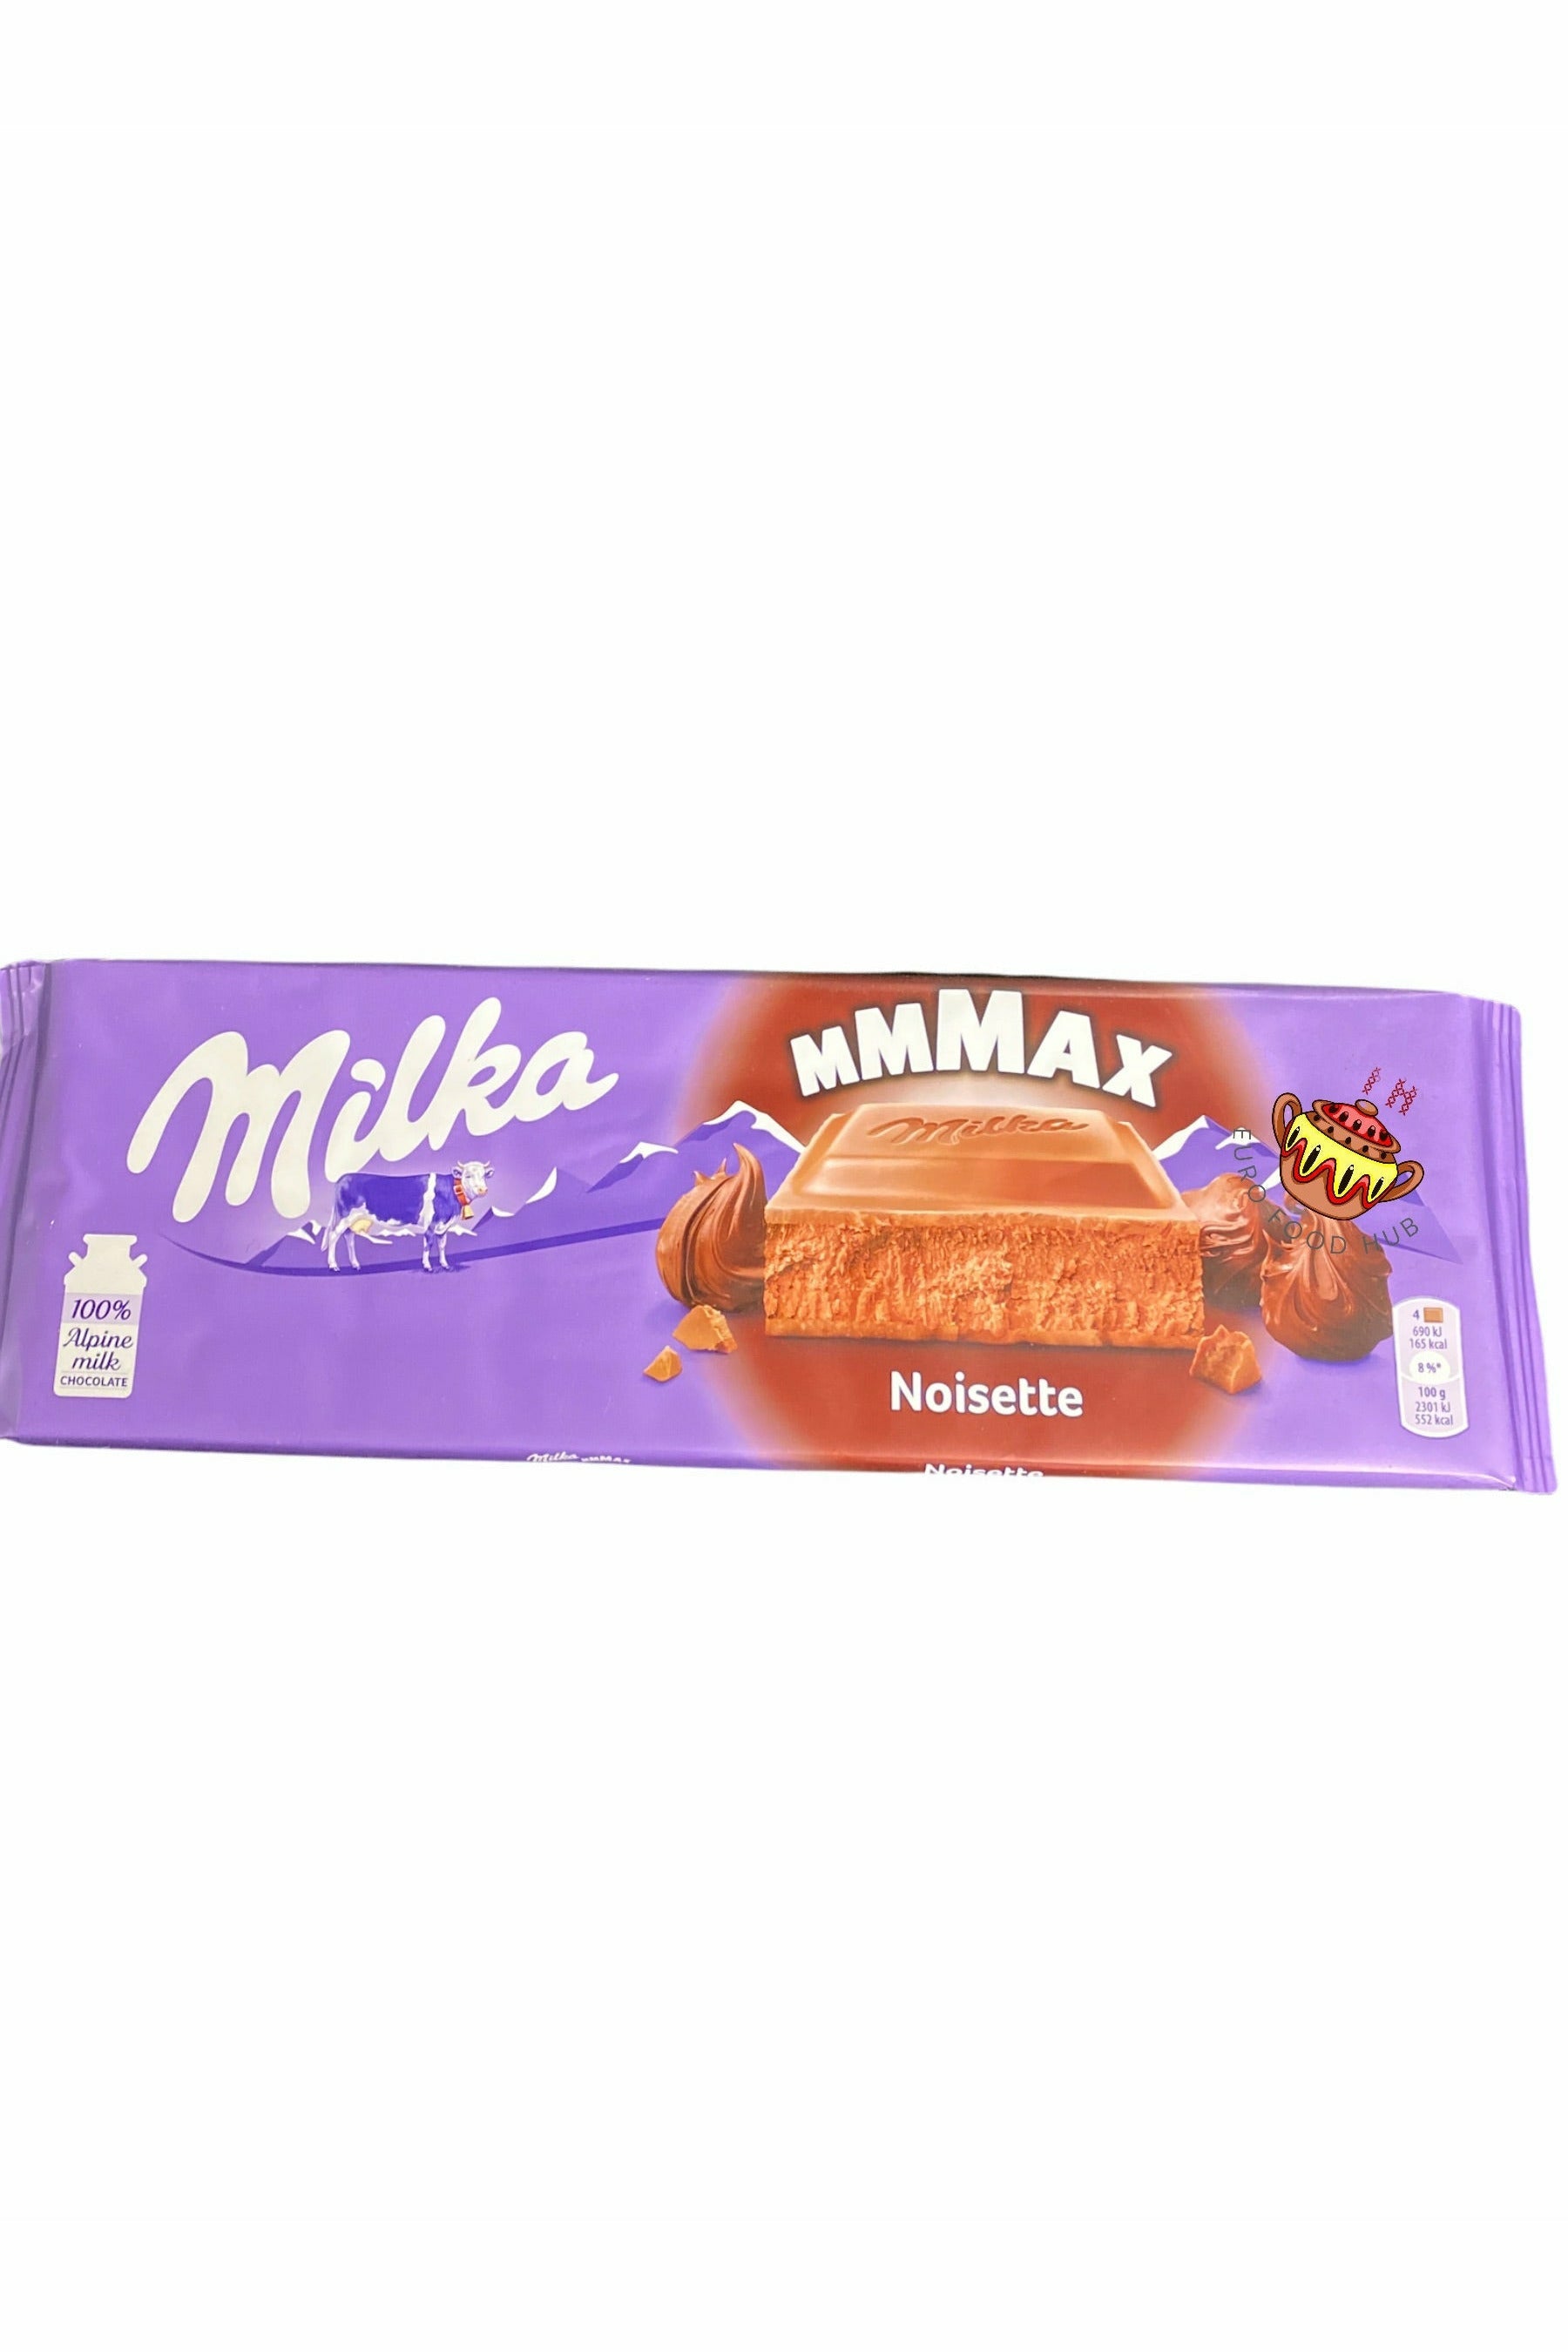 Milka Chocolate - Noisette Max - 270g